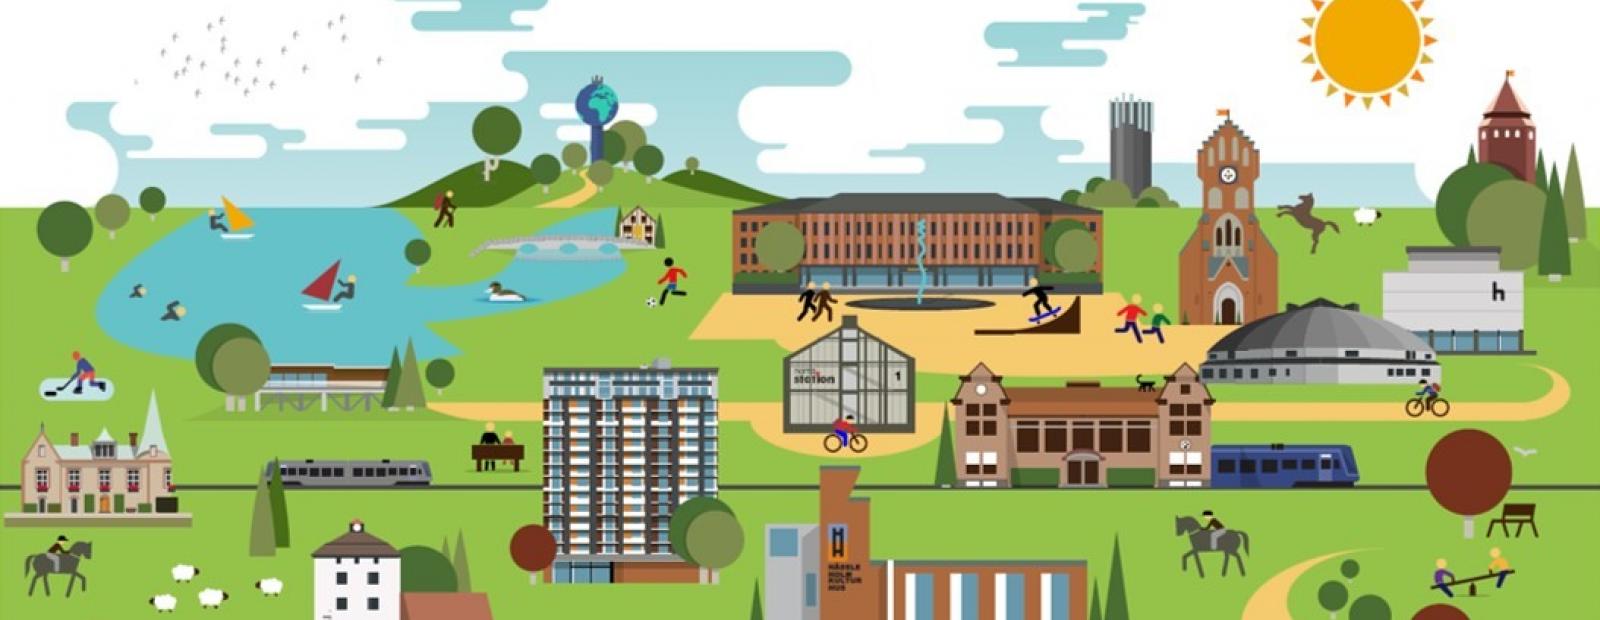 Hässleholms kommun illustration